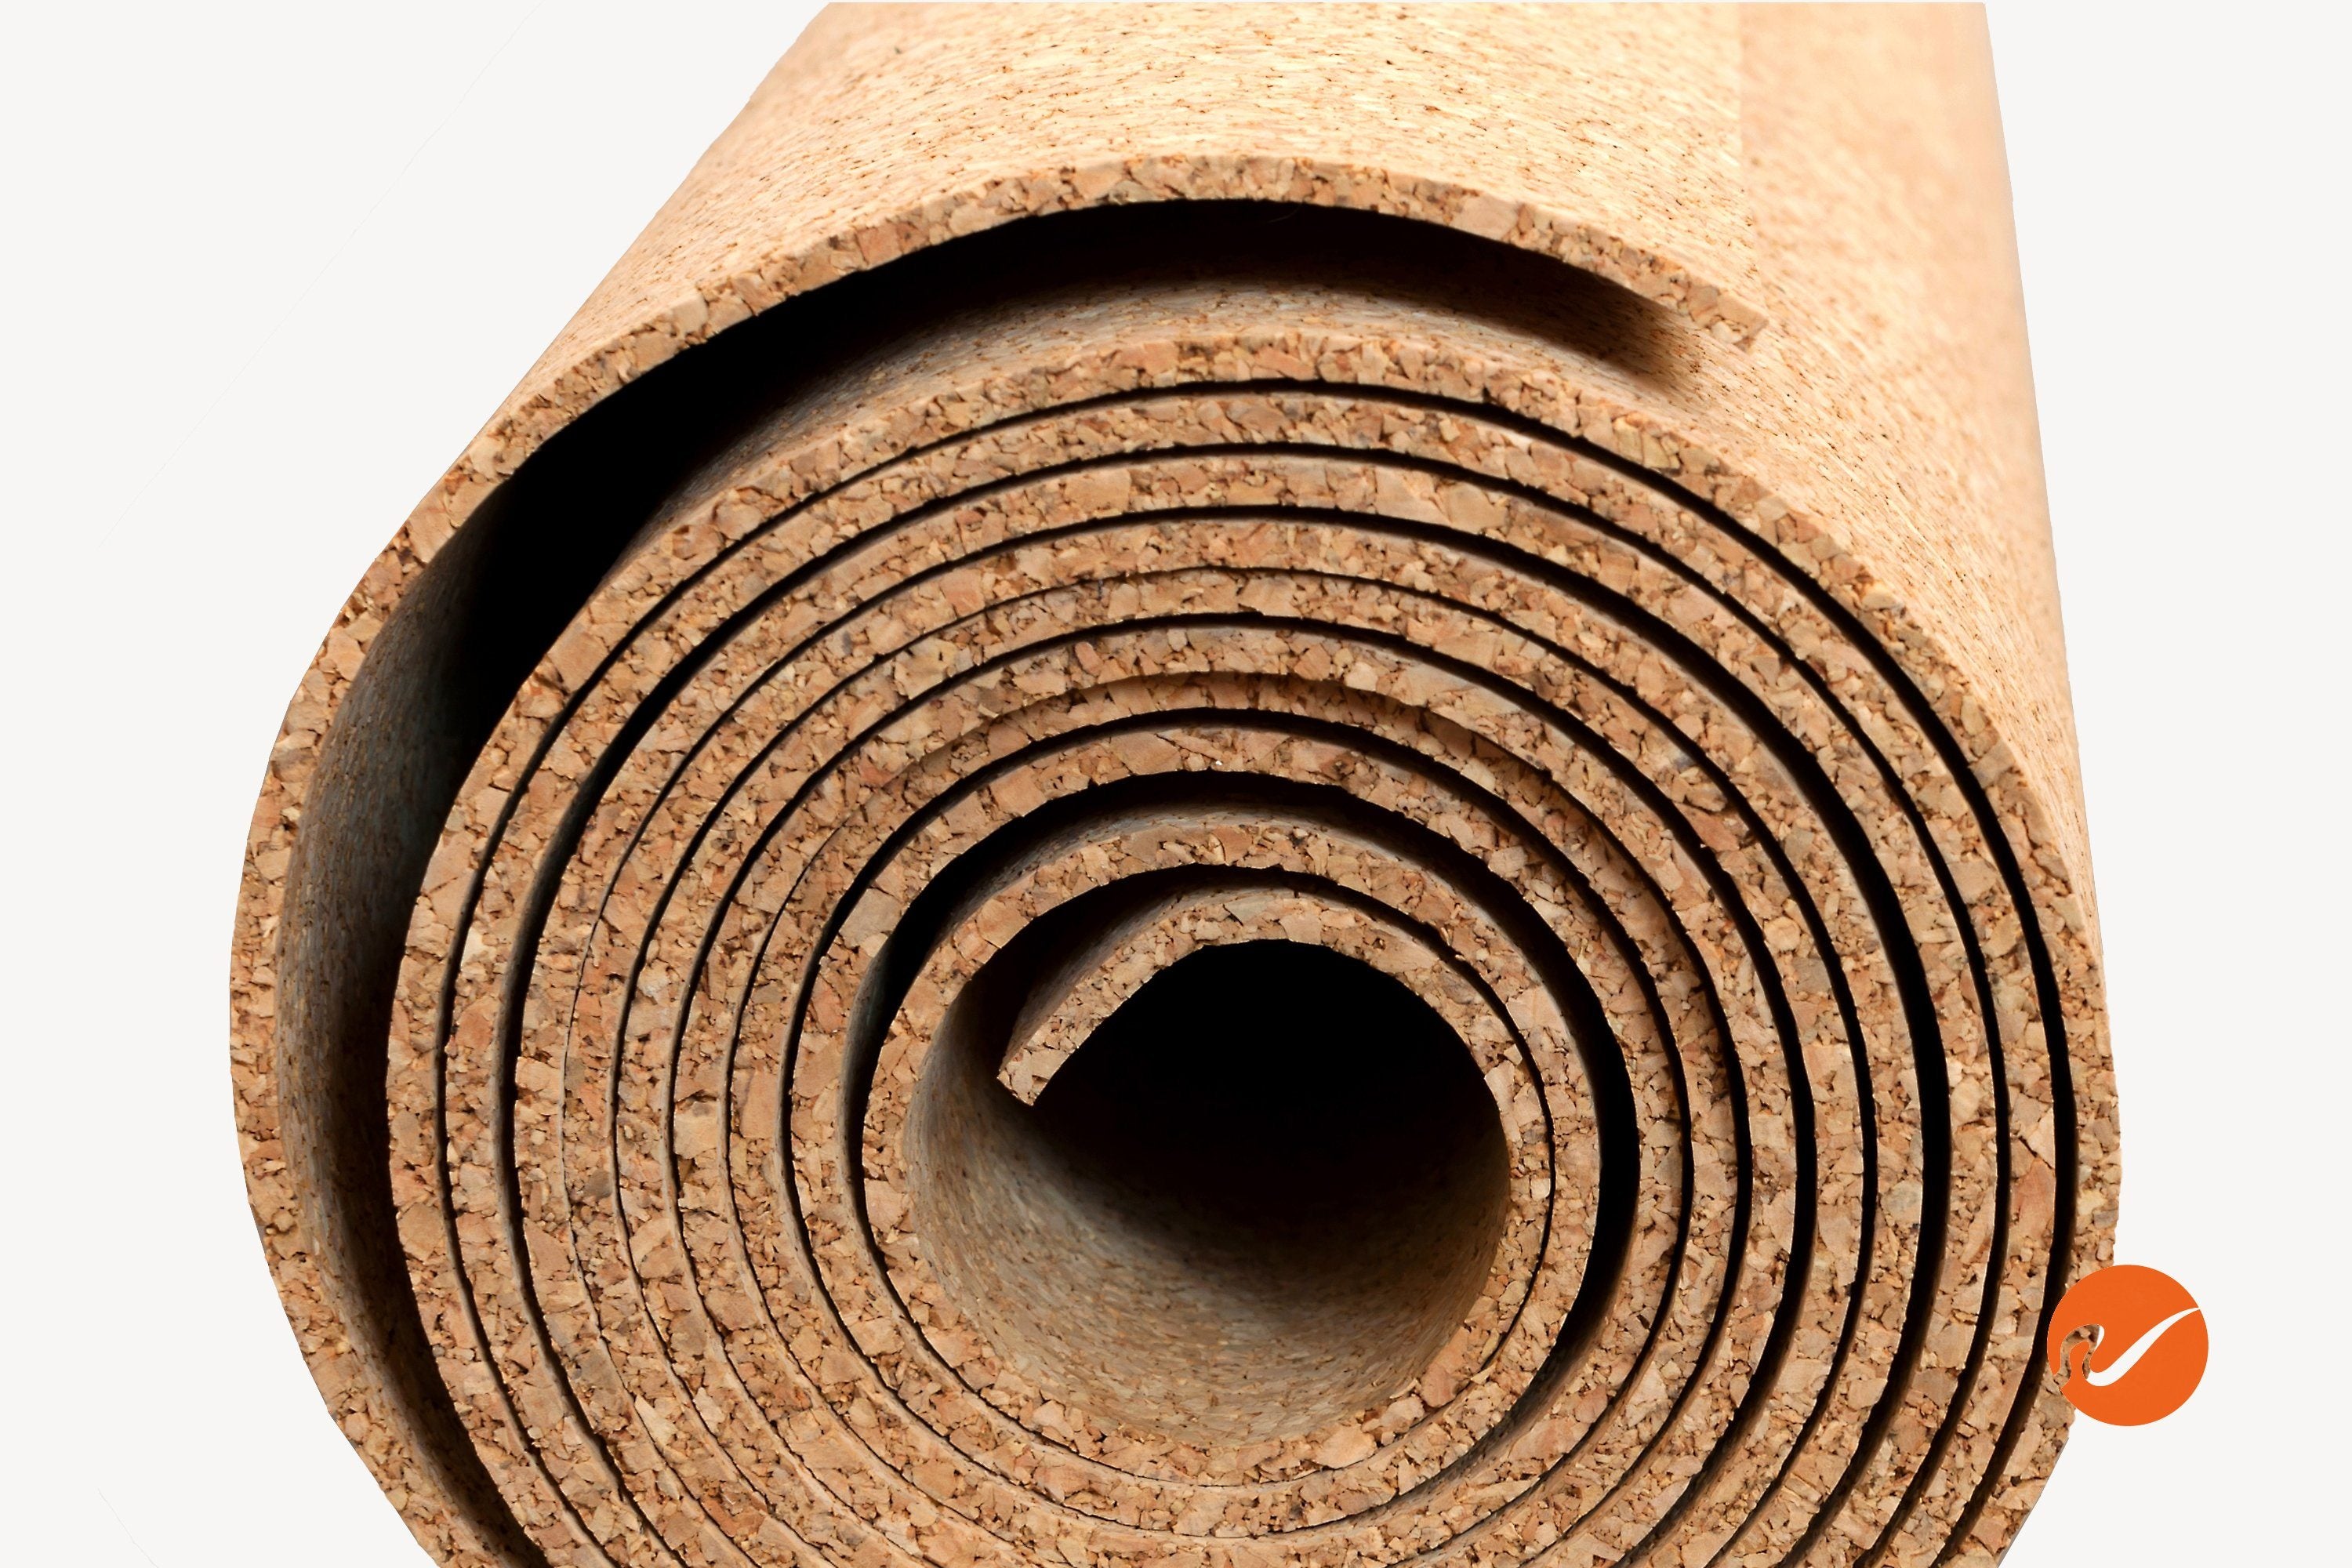 Cork Roll - 1/4 x 36 x 30 feet - Roll of cork